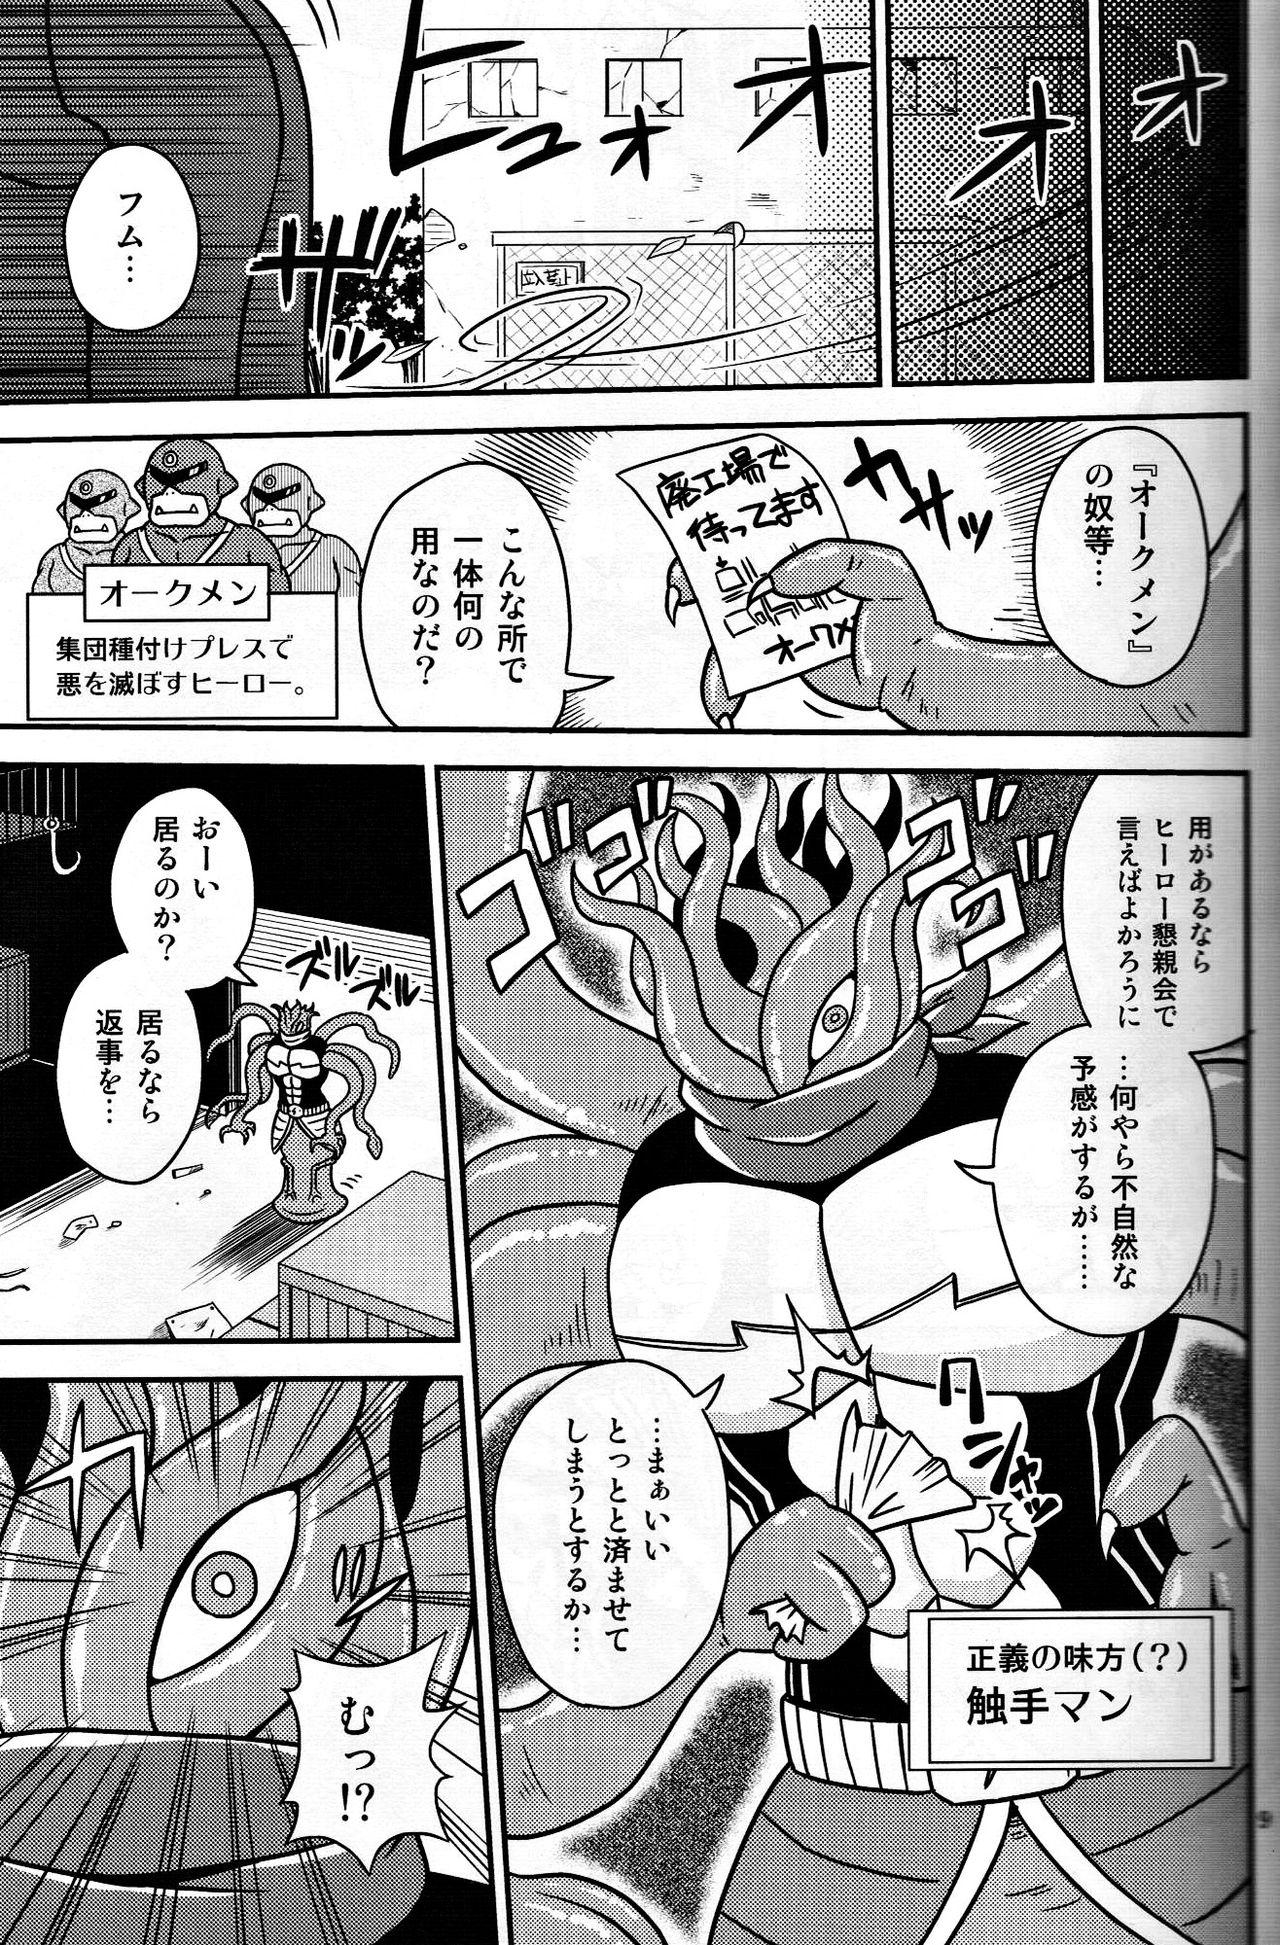 Spreadeagle Shokushu Man VS Usagi Magician Pain - Page 8